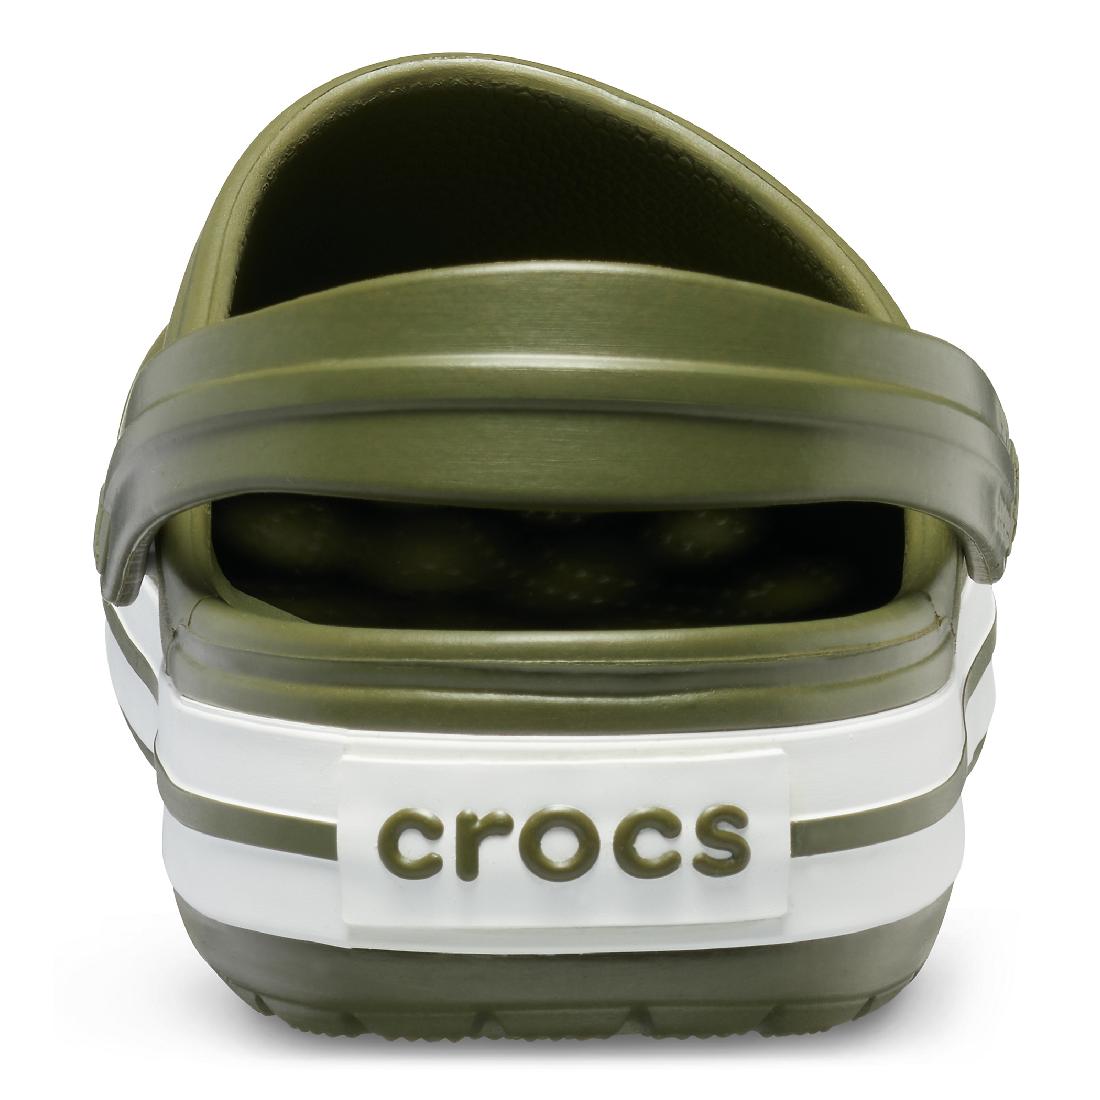 Crocs Crocband Clog Sandale Badelatsche Unisex 11016 Grün